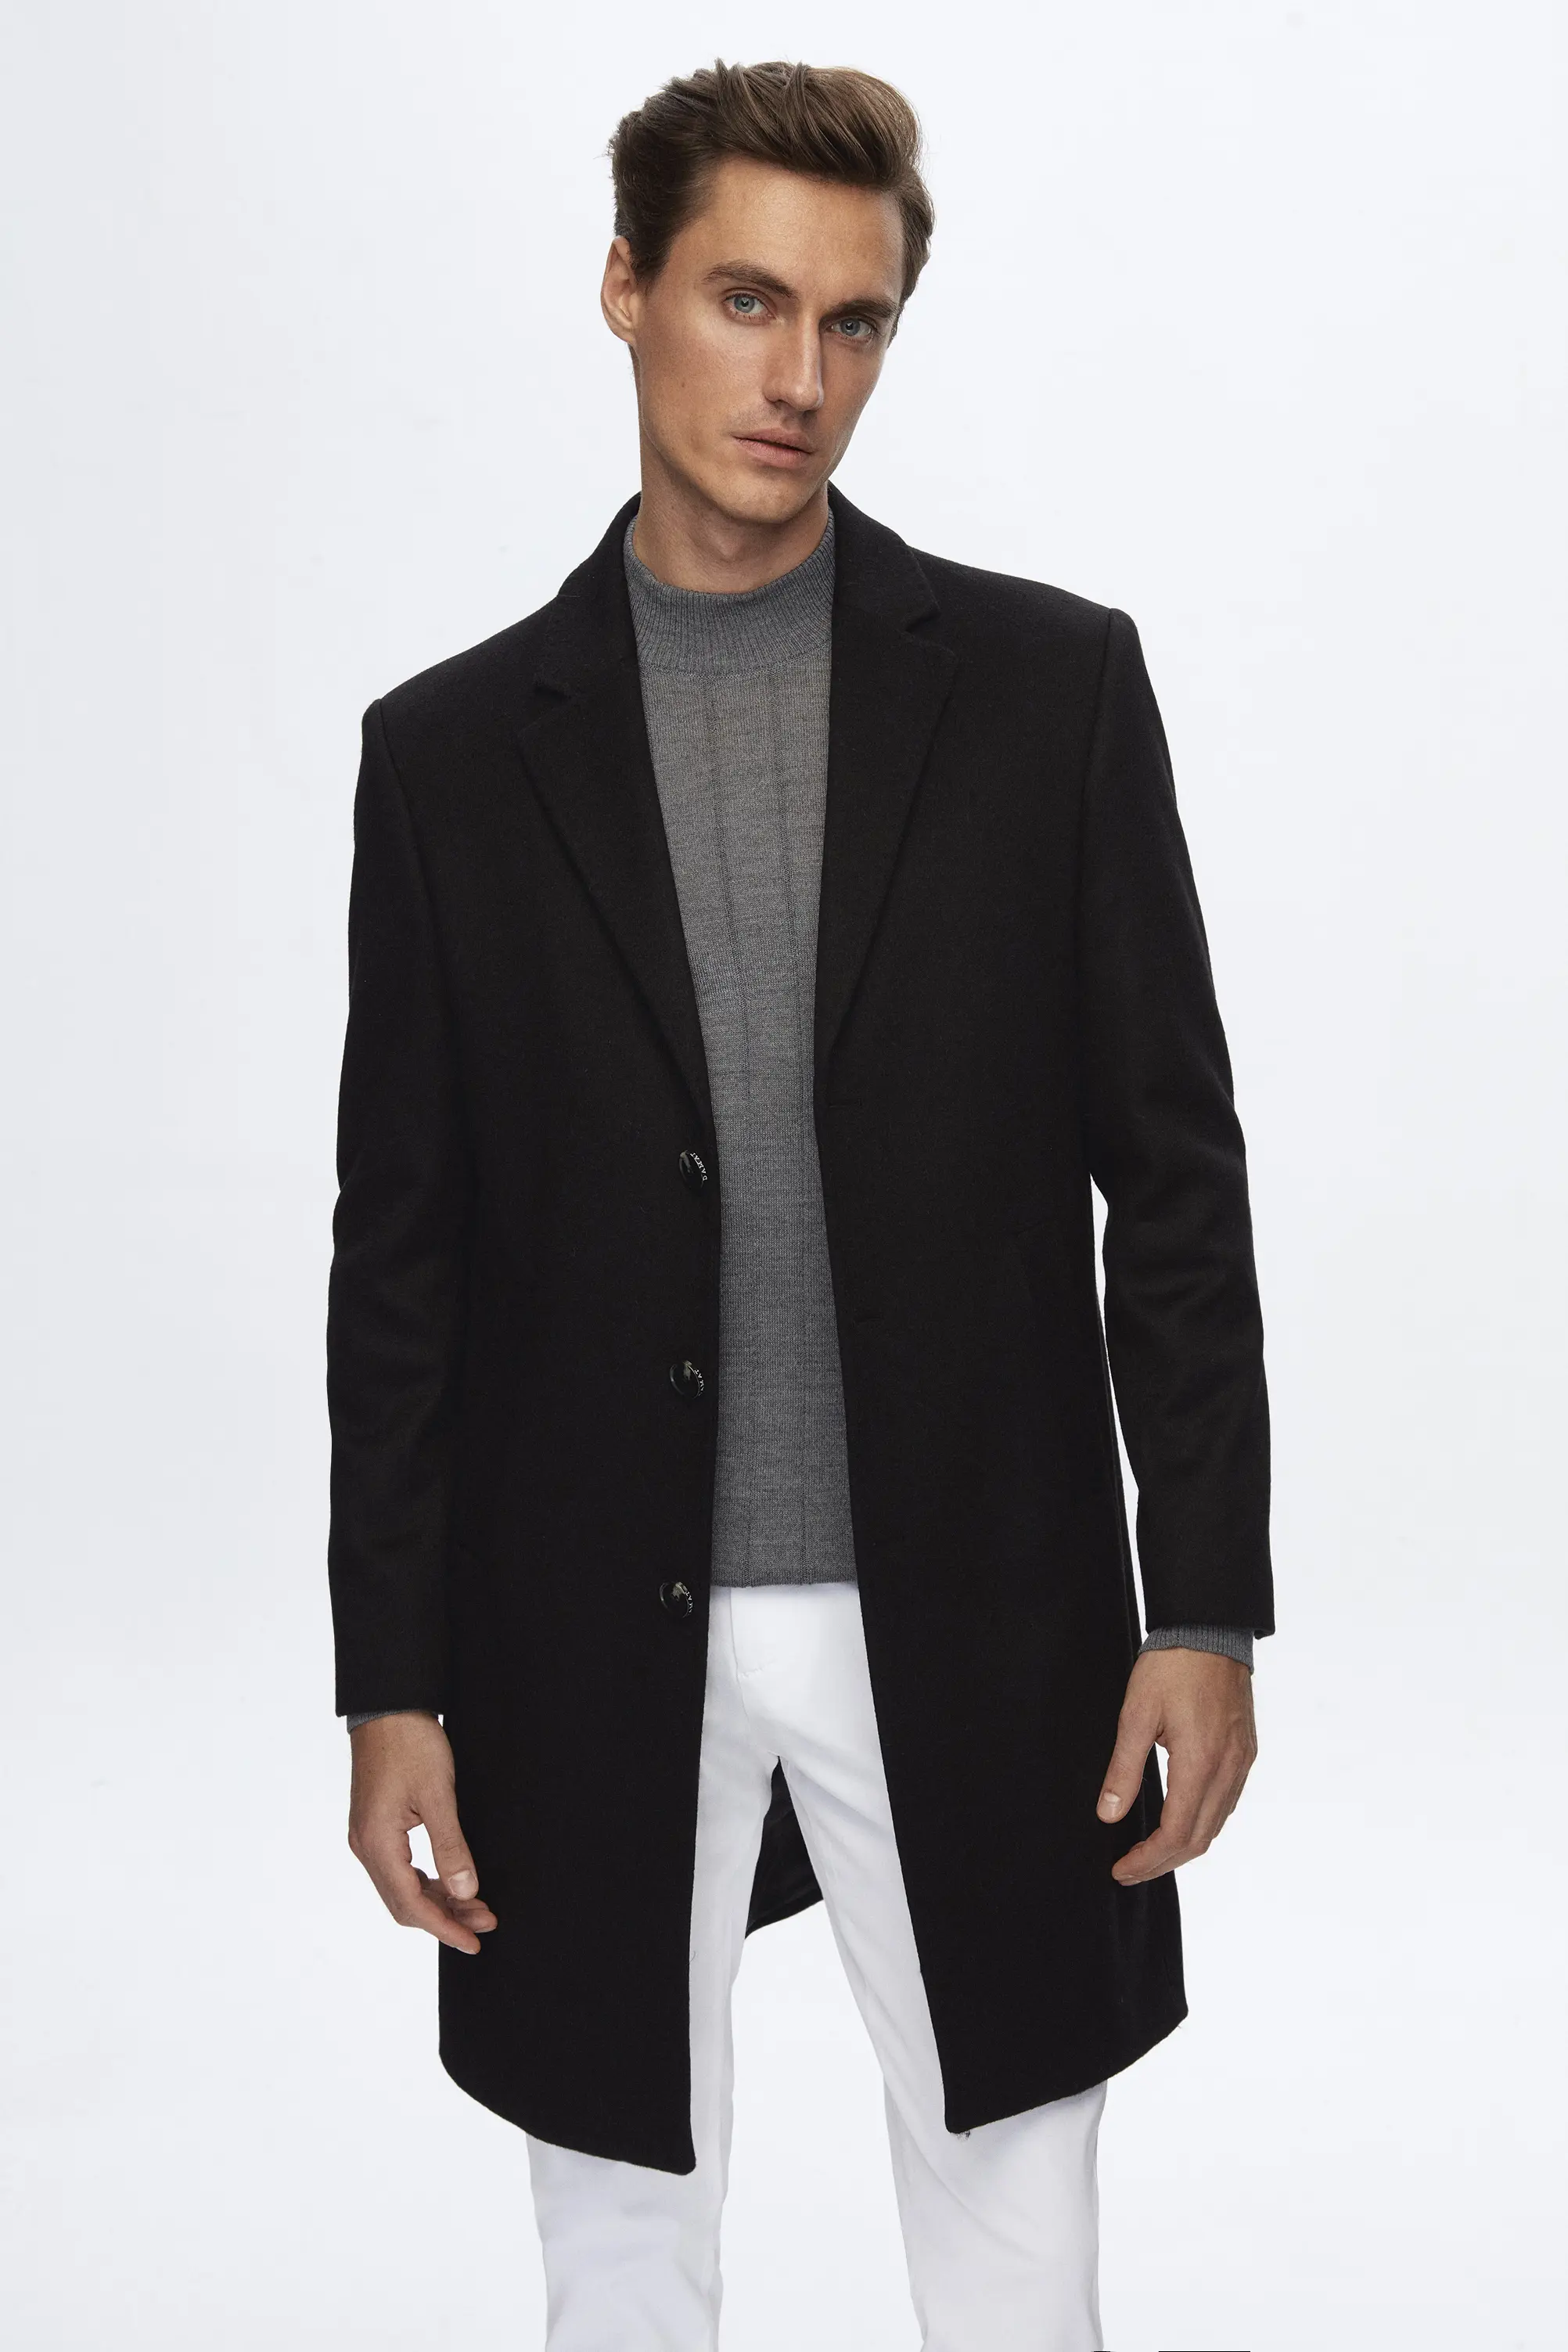 Damat Tween Damat Slim Fit Siyah Kaşmir-Yün Karışımlı Palto. 1